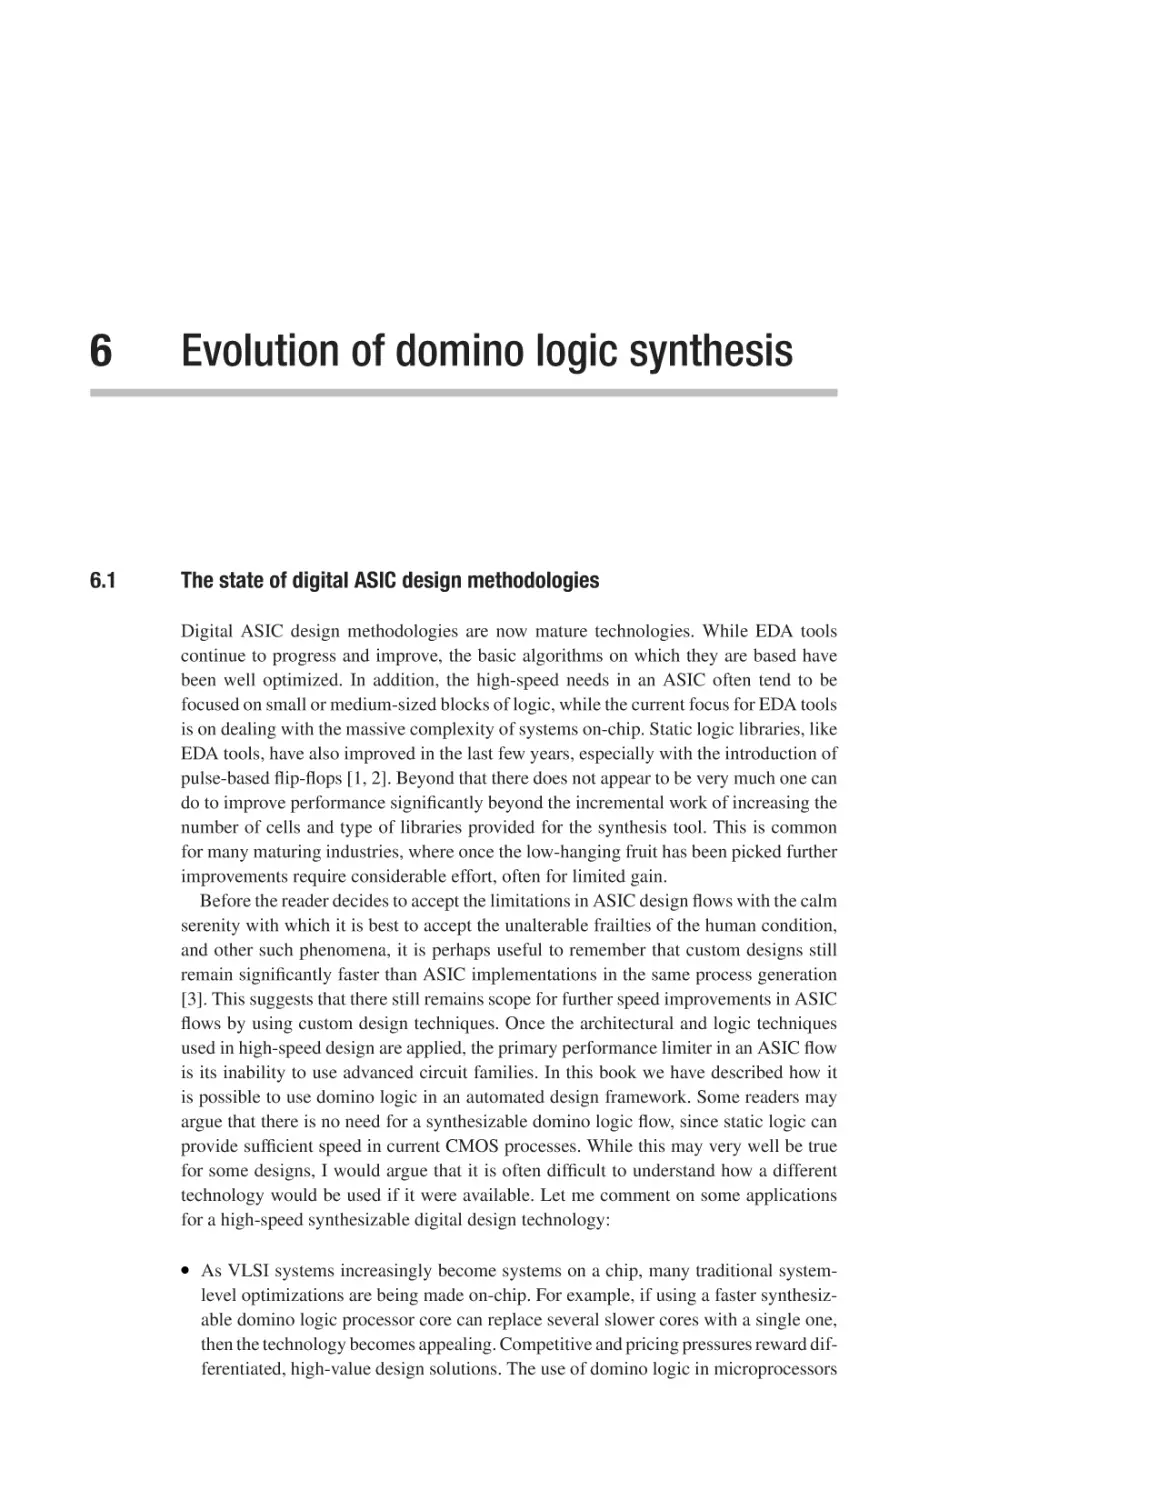 6 Evolution of domino logic synthesis
6.1 The state of digital ASIC design methodologies